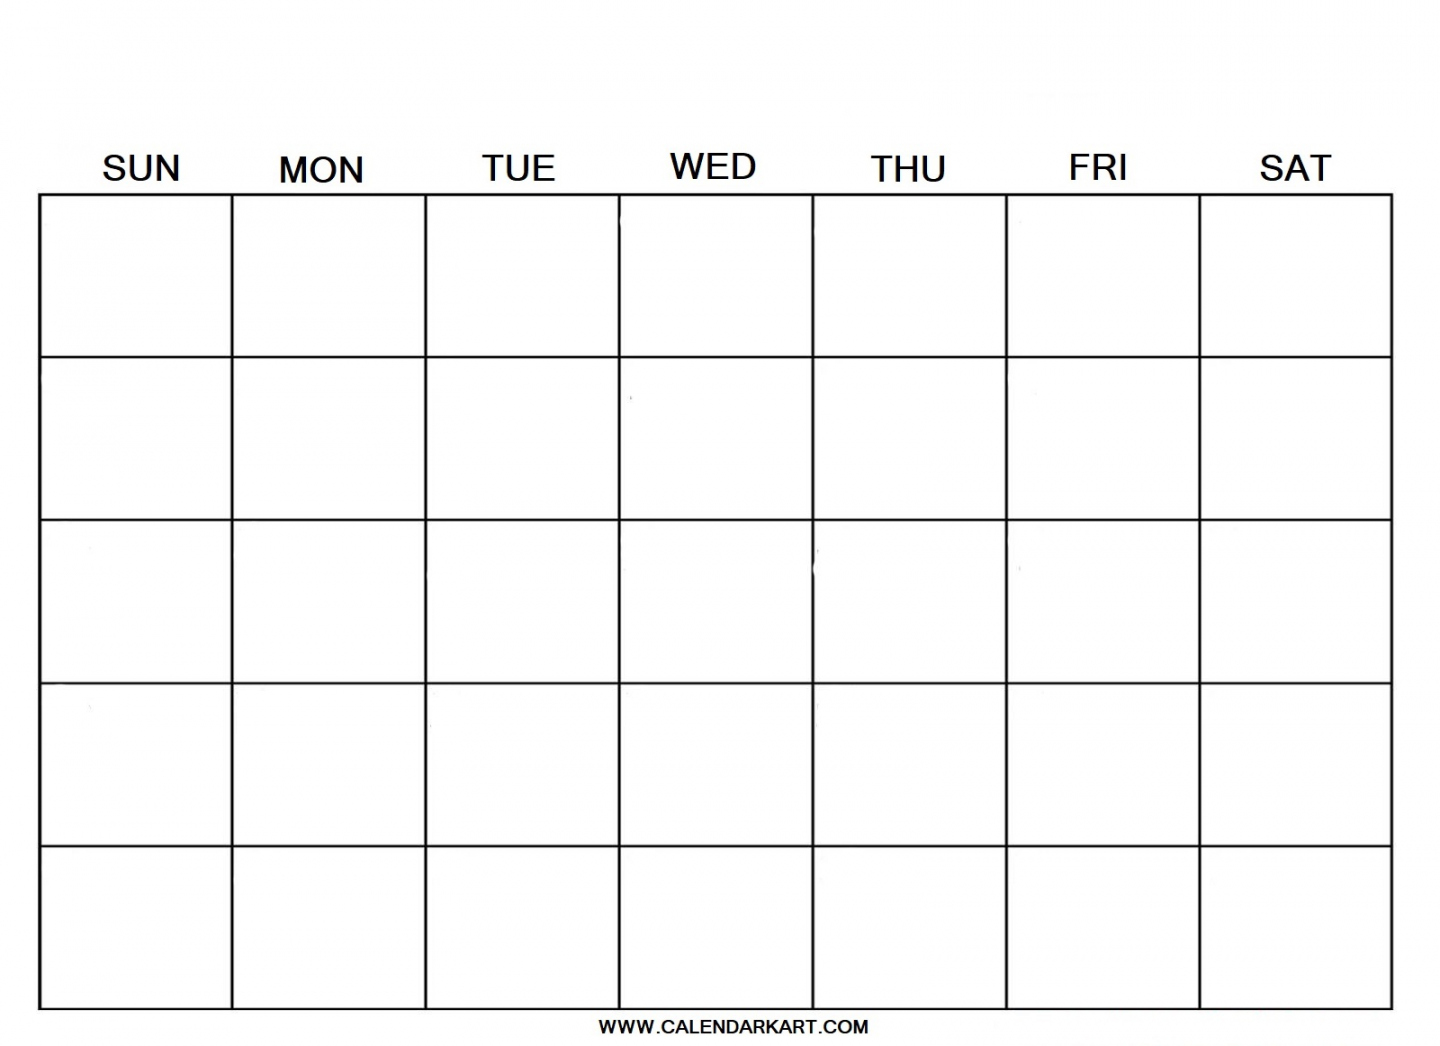 Free Printable Calendar Blank - Printable - Free Printable Blank Calendar Templates - CalendarKart